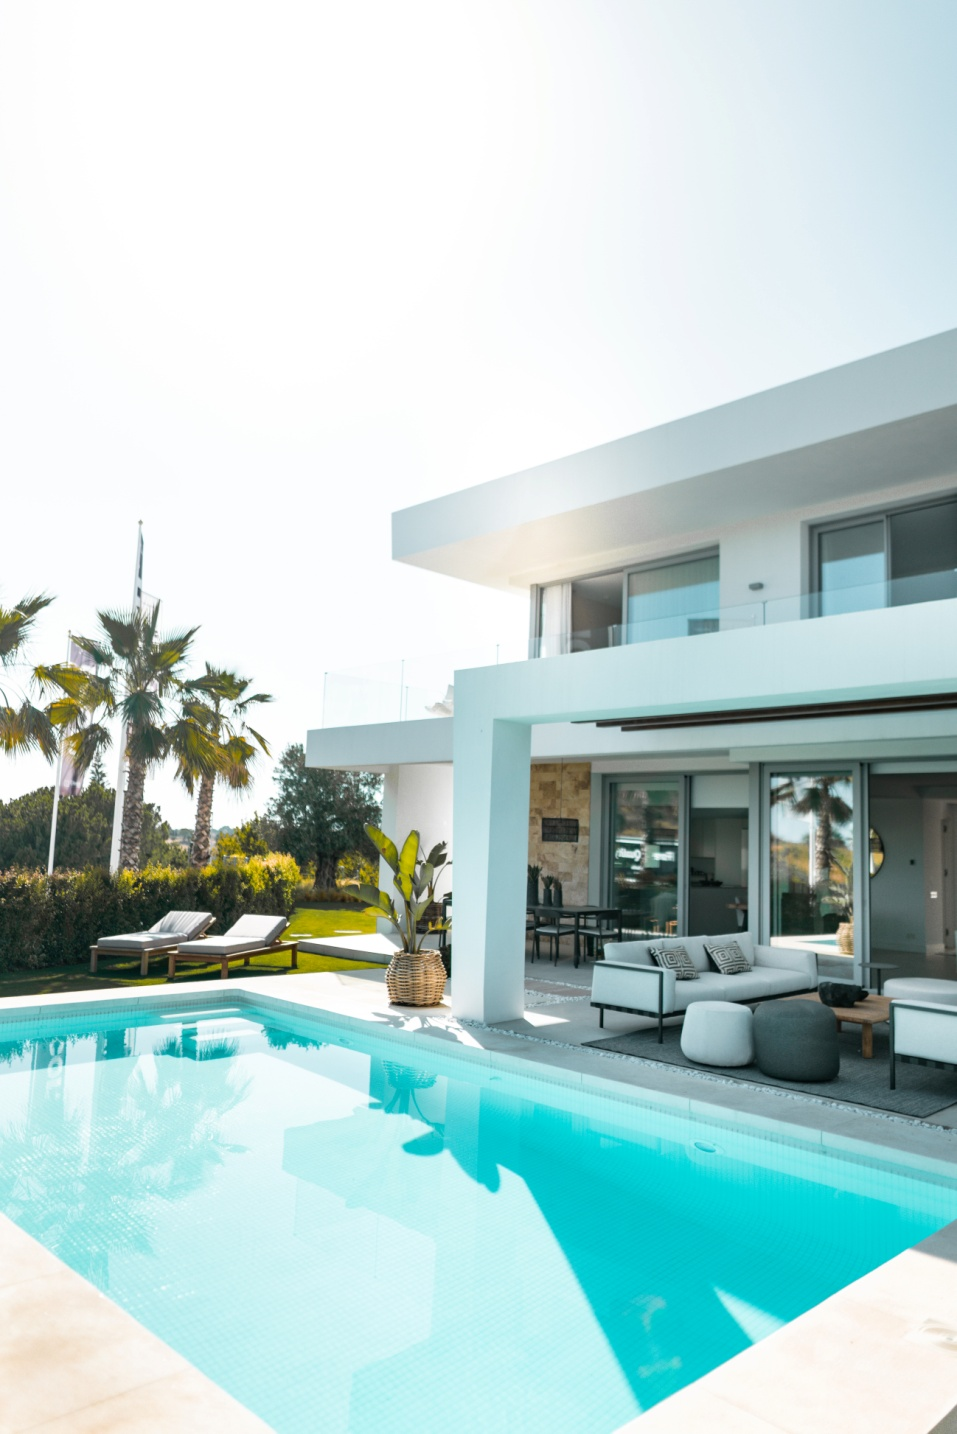 A house with a geometric pool